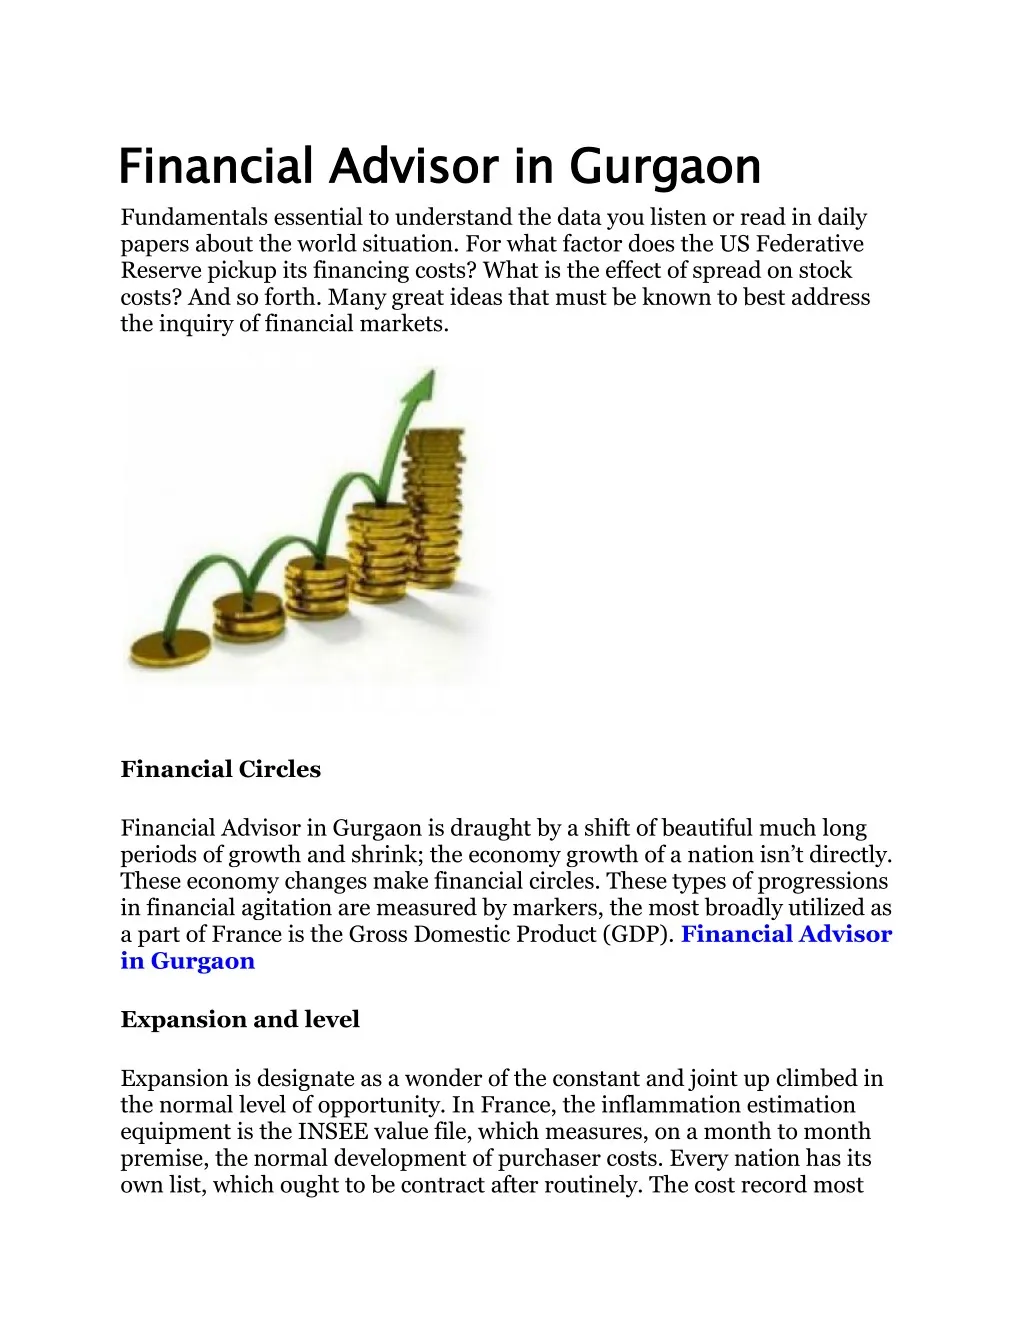 financial advisor in fundamentals essential